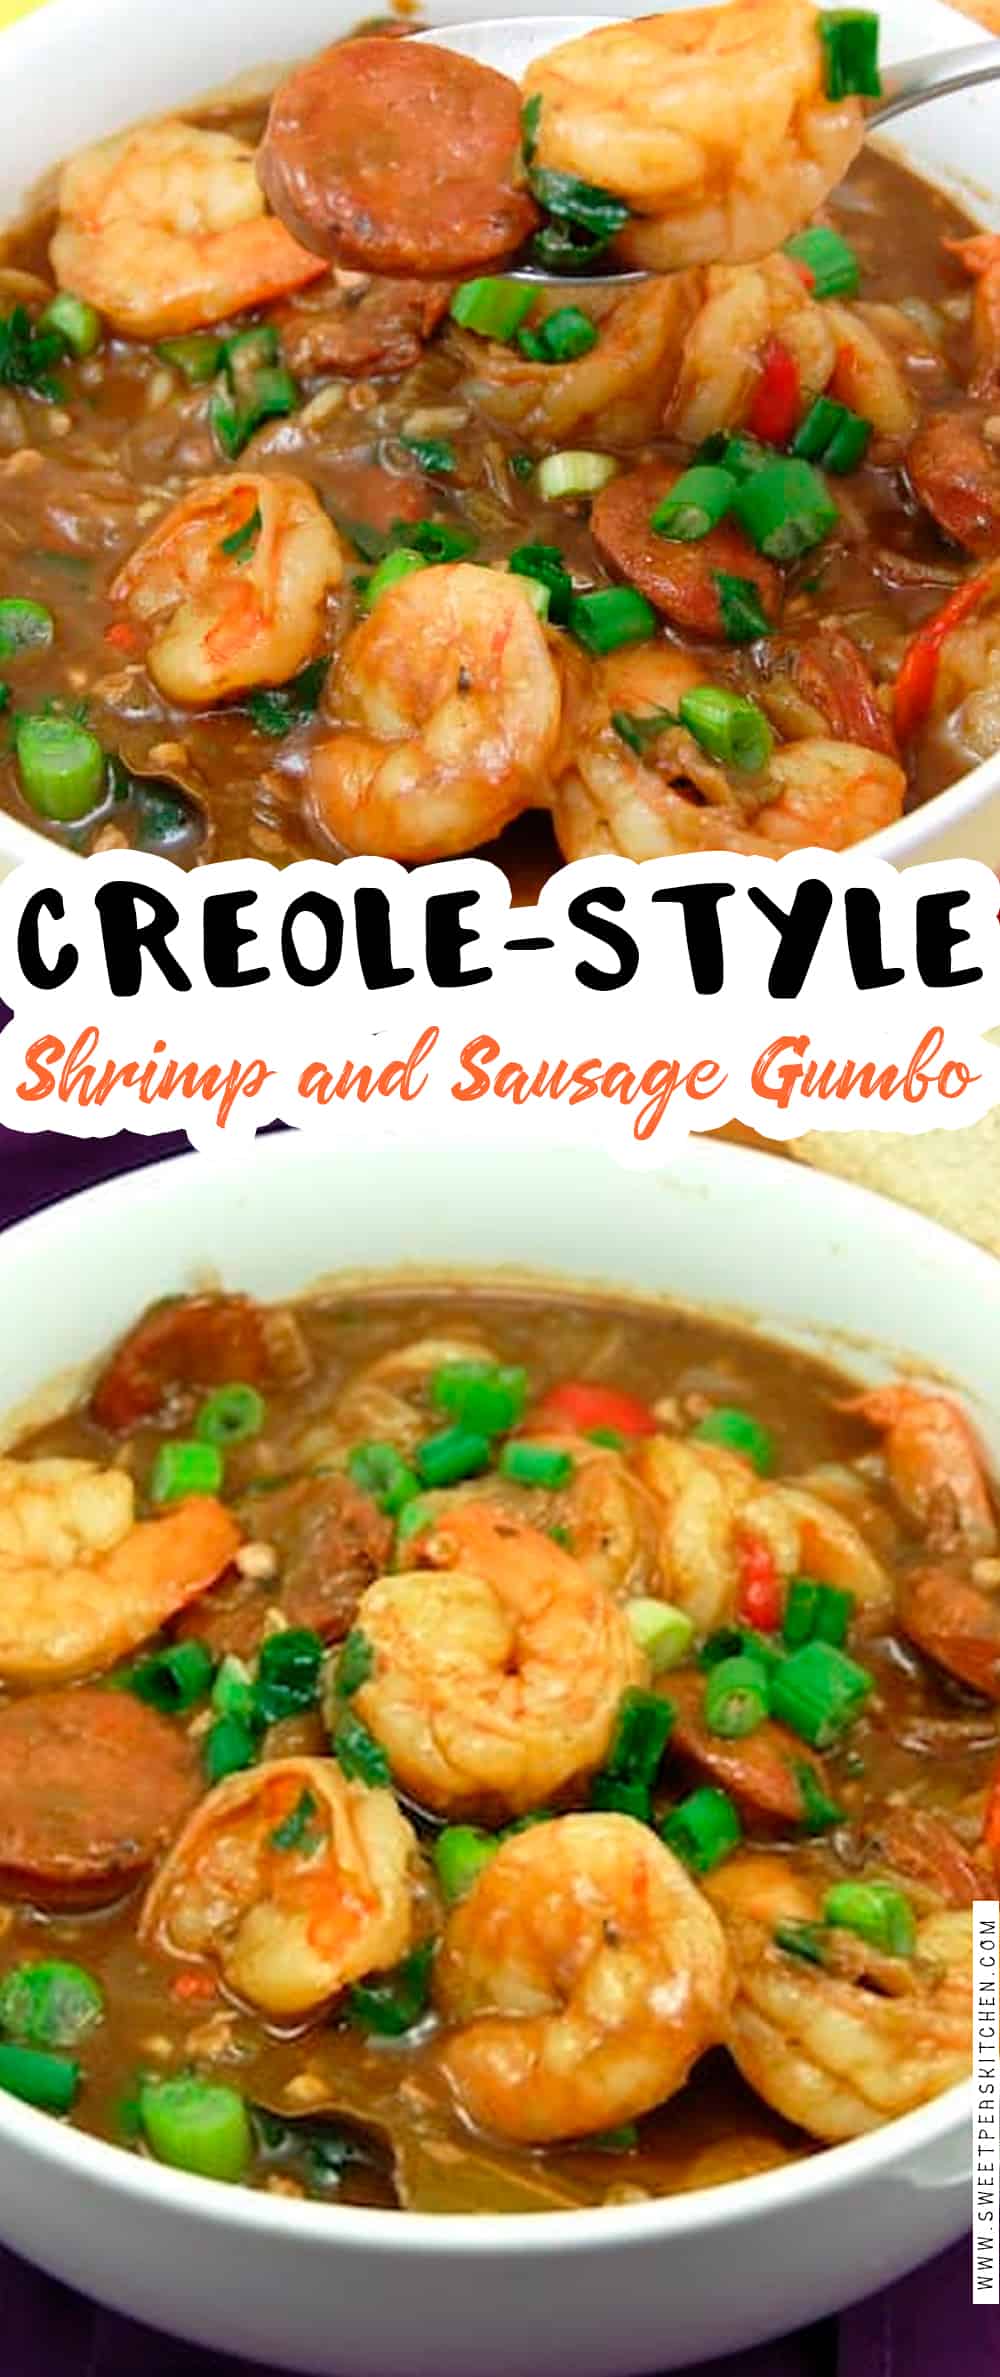 Creole-Style Shrimp and Sausage Gumbo